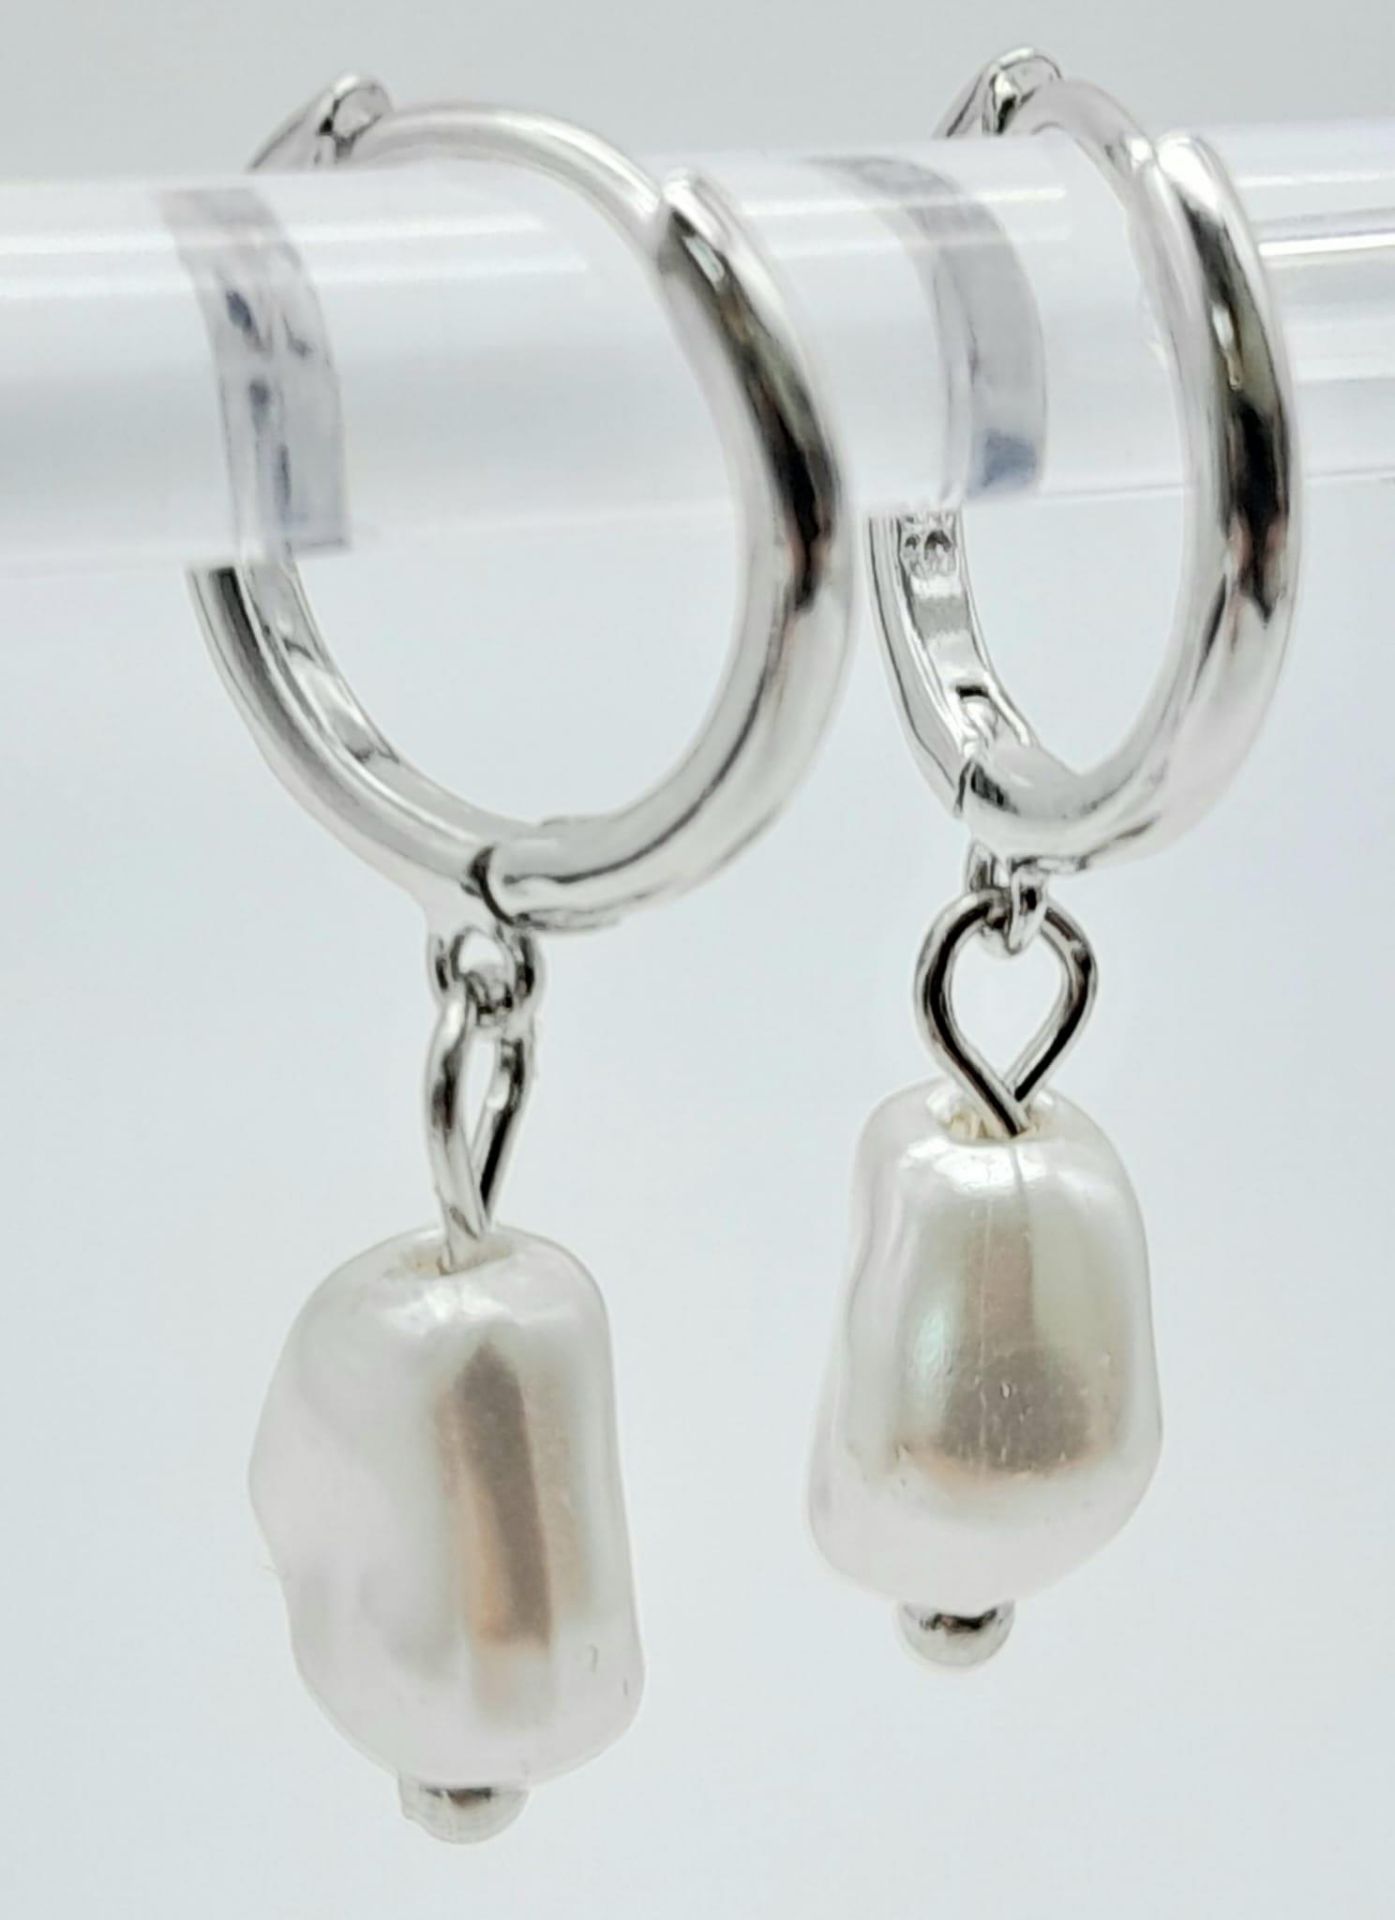 Pair of 925 Silver, Pearl Earrings. Drop measures 1cm. Weight: 1.40g - Image 2 of 4